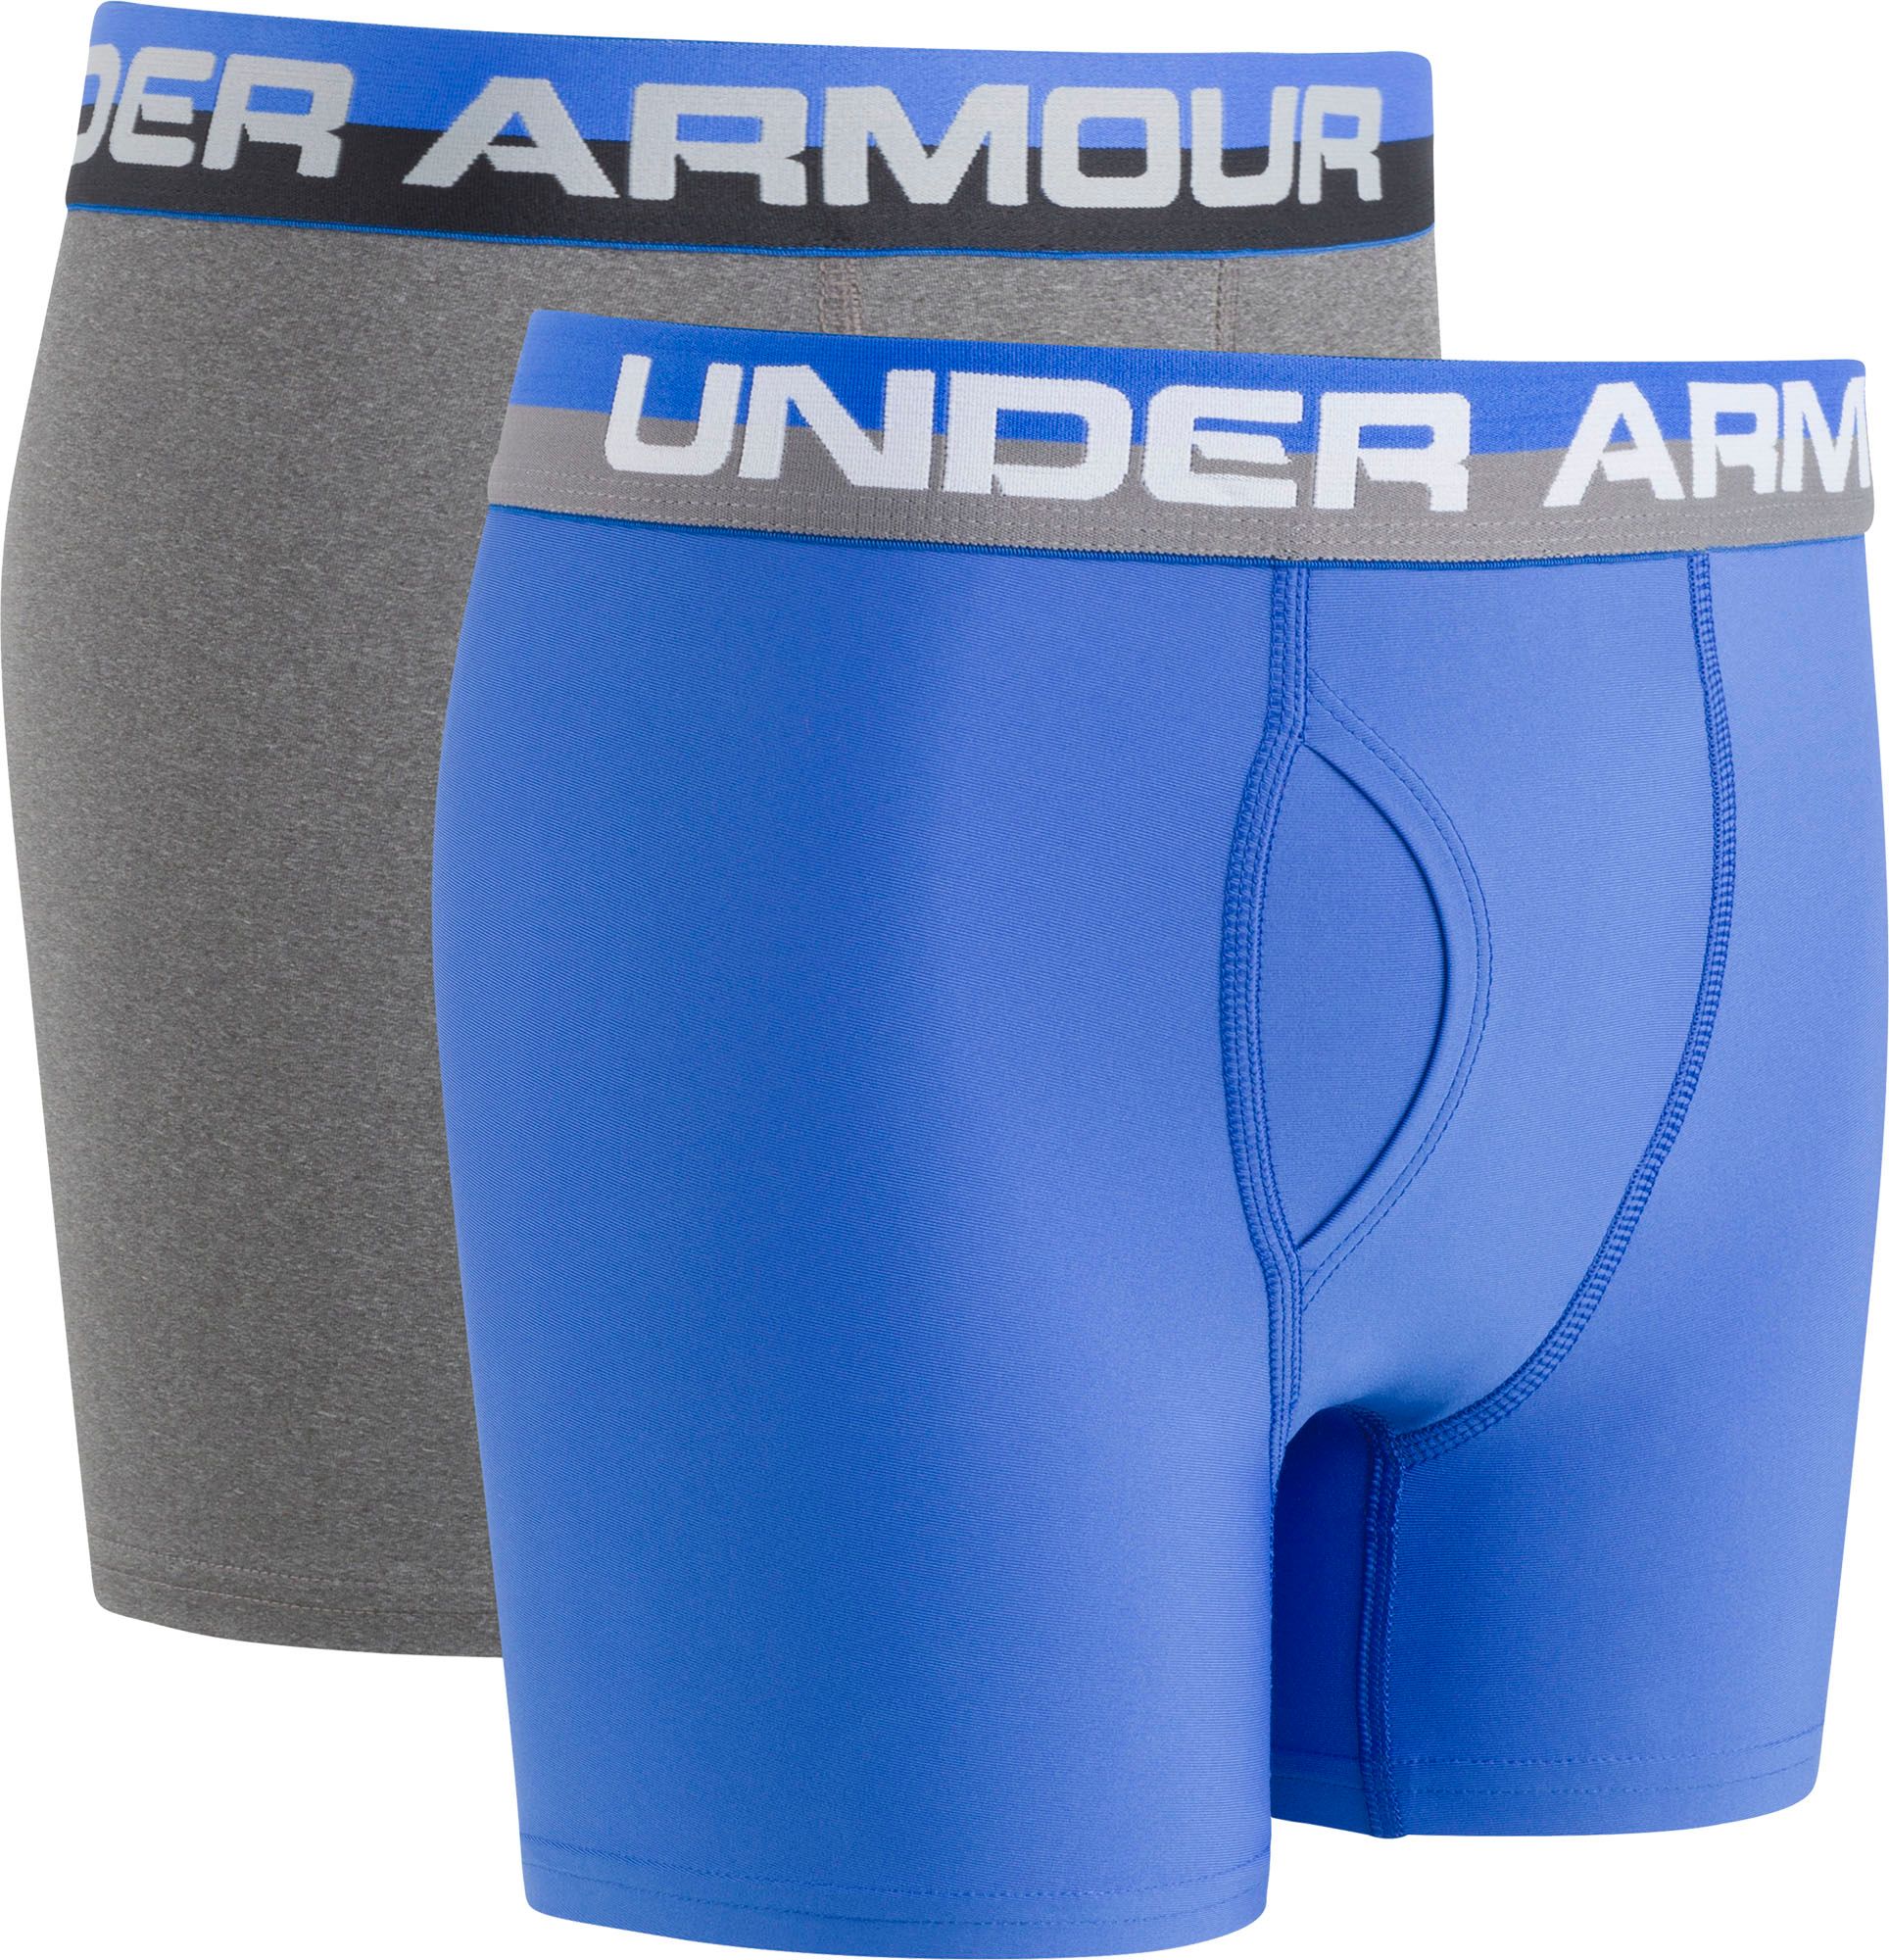 under armour boxer brief